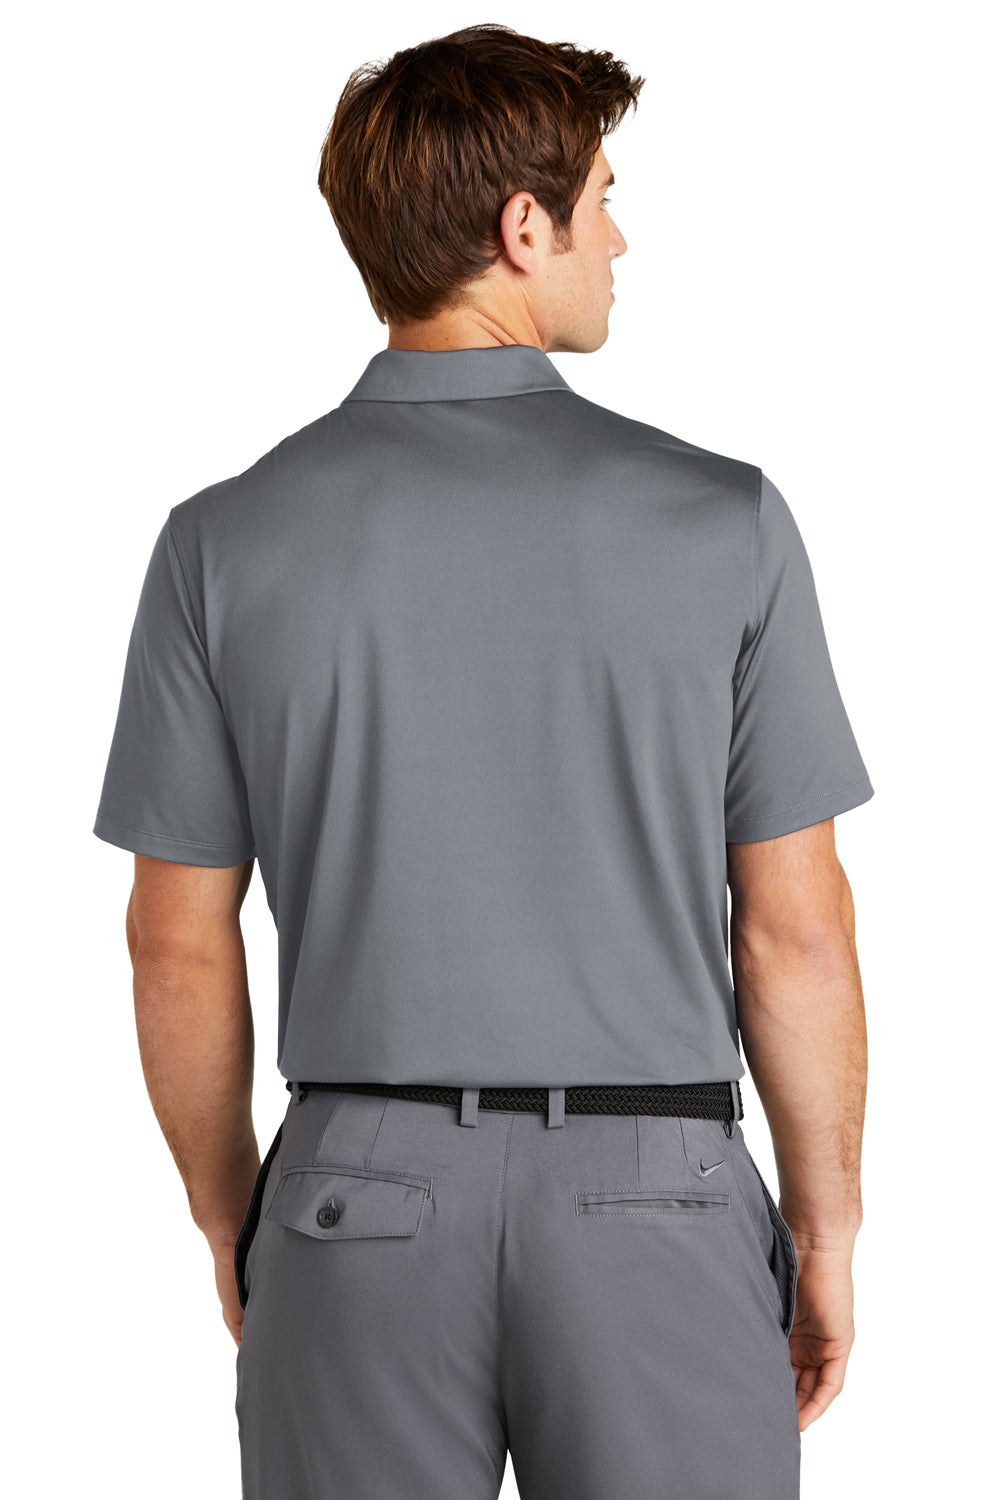 Nike NKDC2108 Mens Vapor Dri-Fit Moisture Wicking Short Sleeve Polo Shirt Cool Grey Model Back